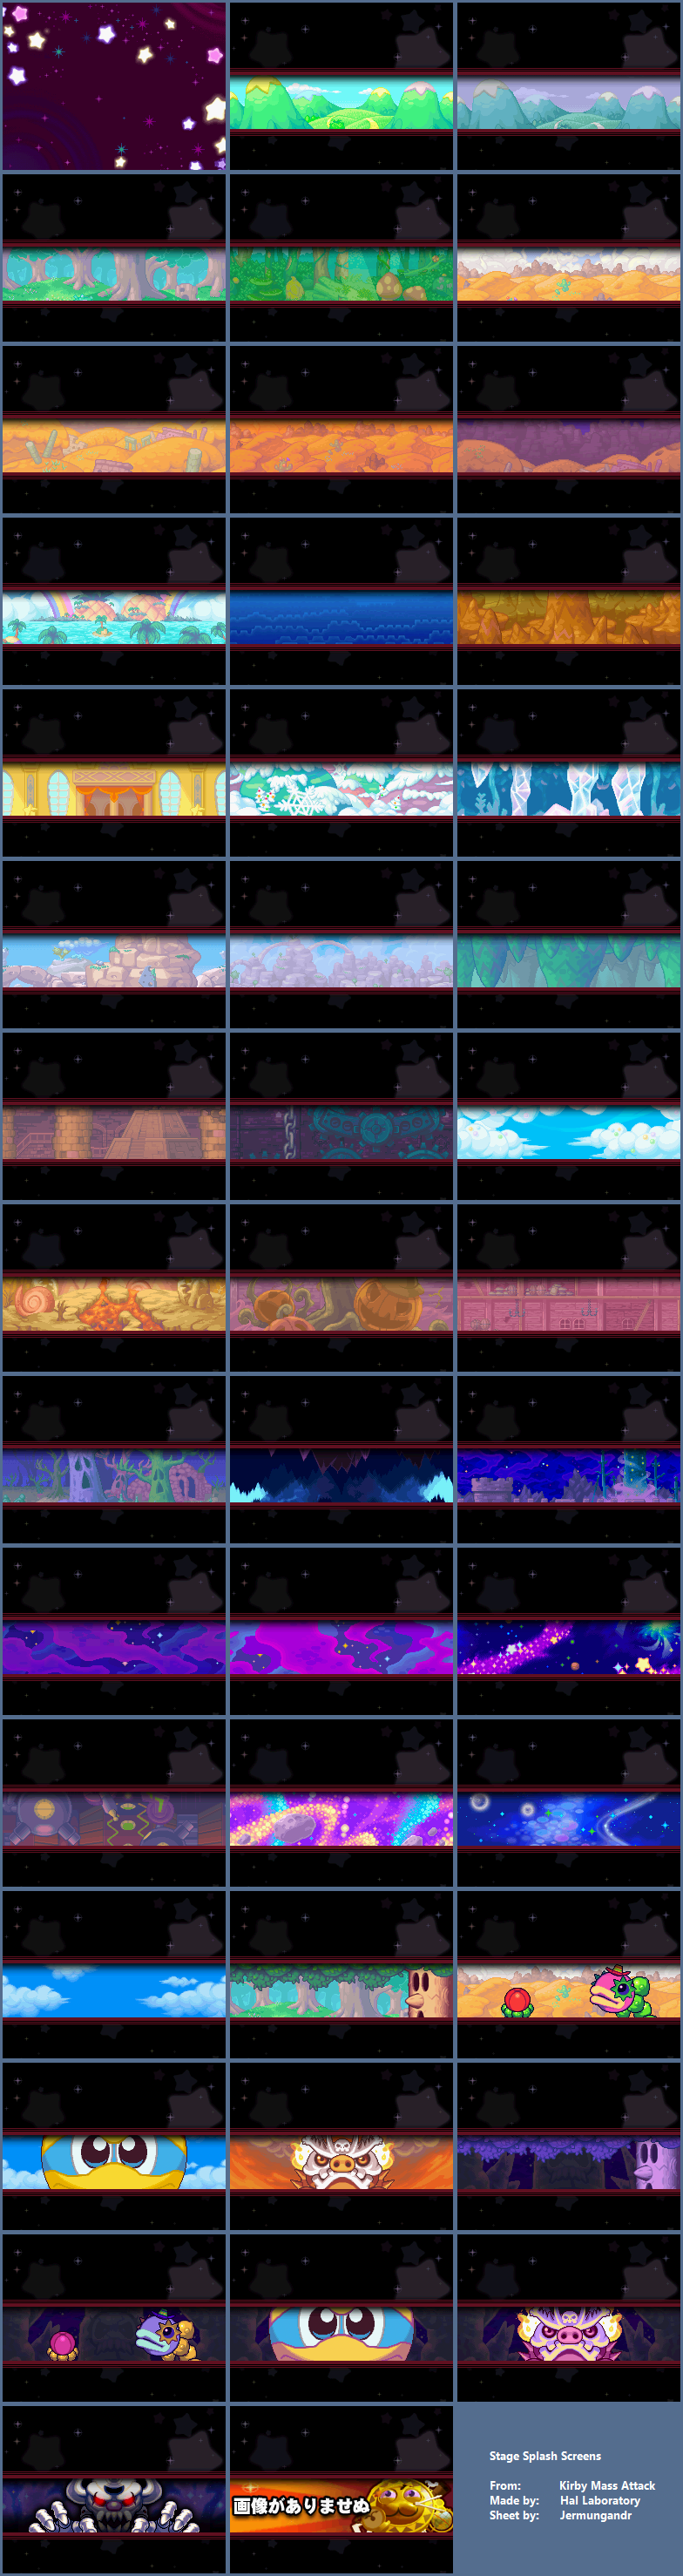 Kirby Mass Attack - Stage Splash Screens